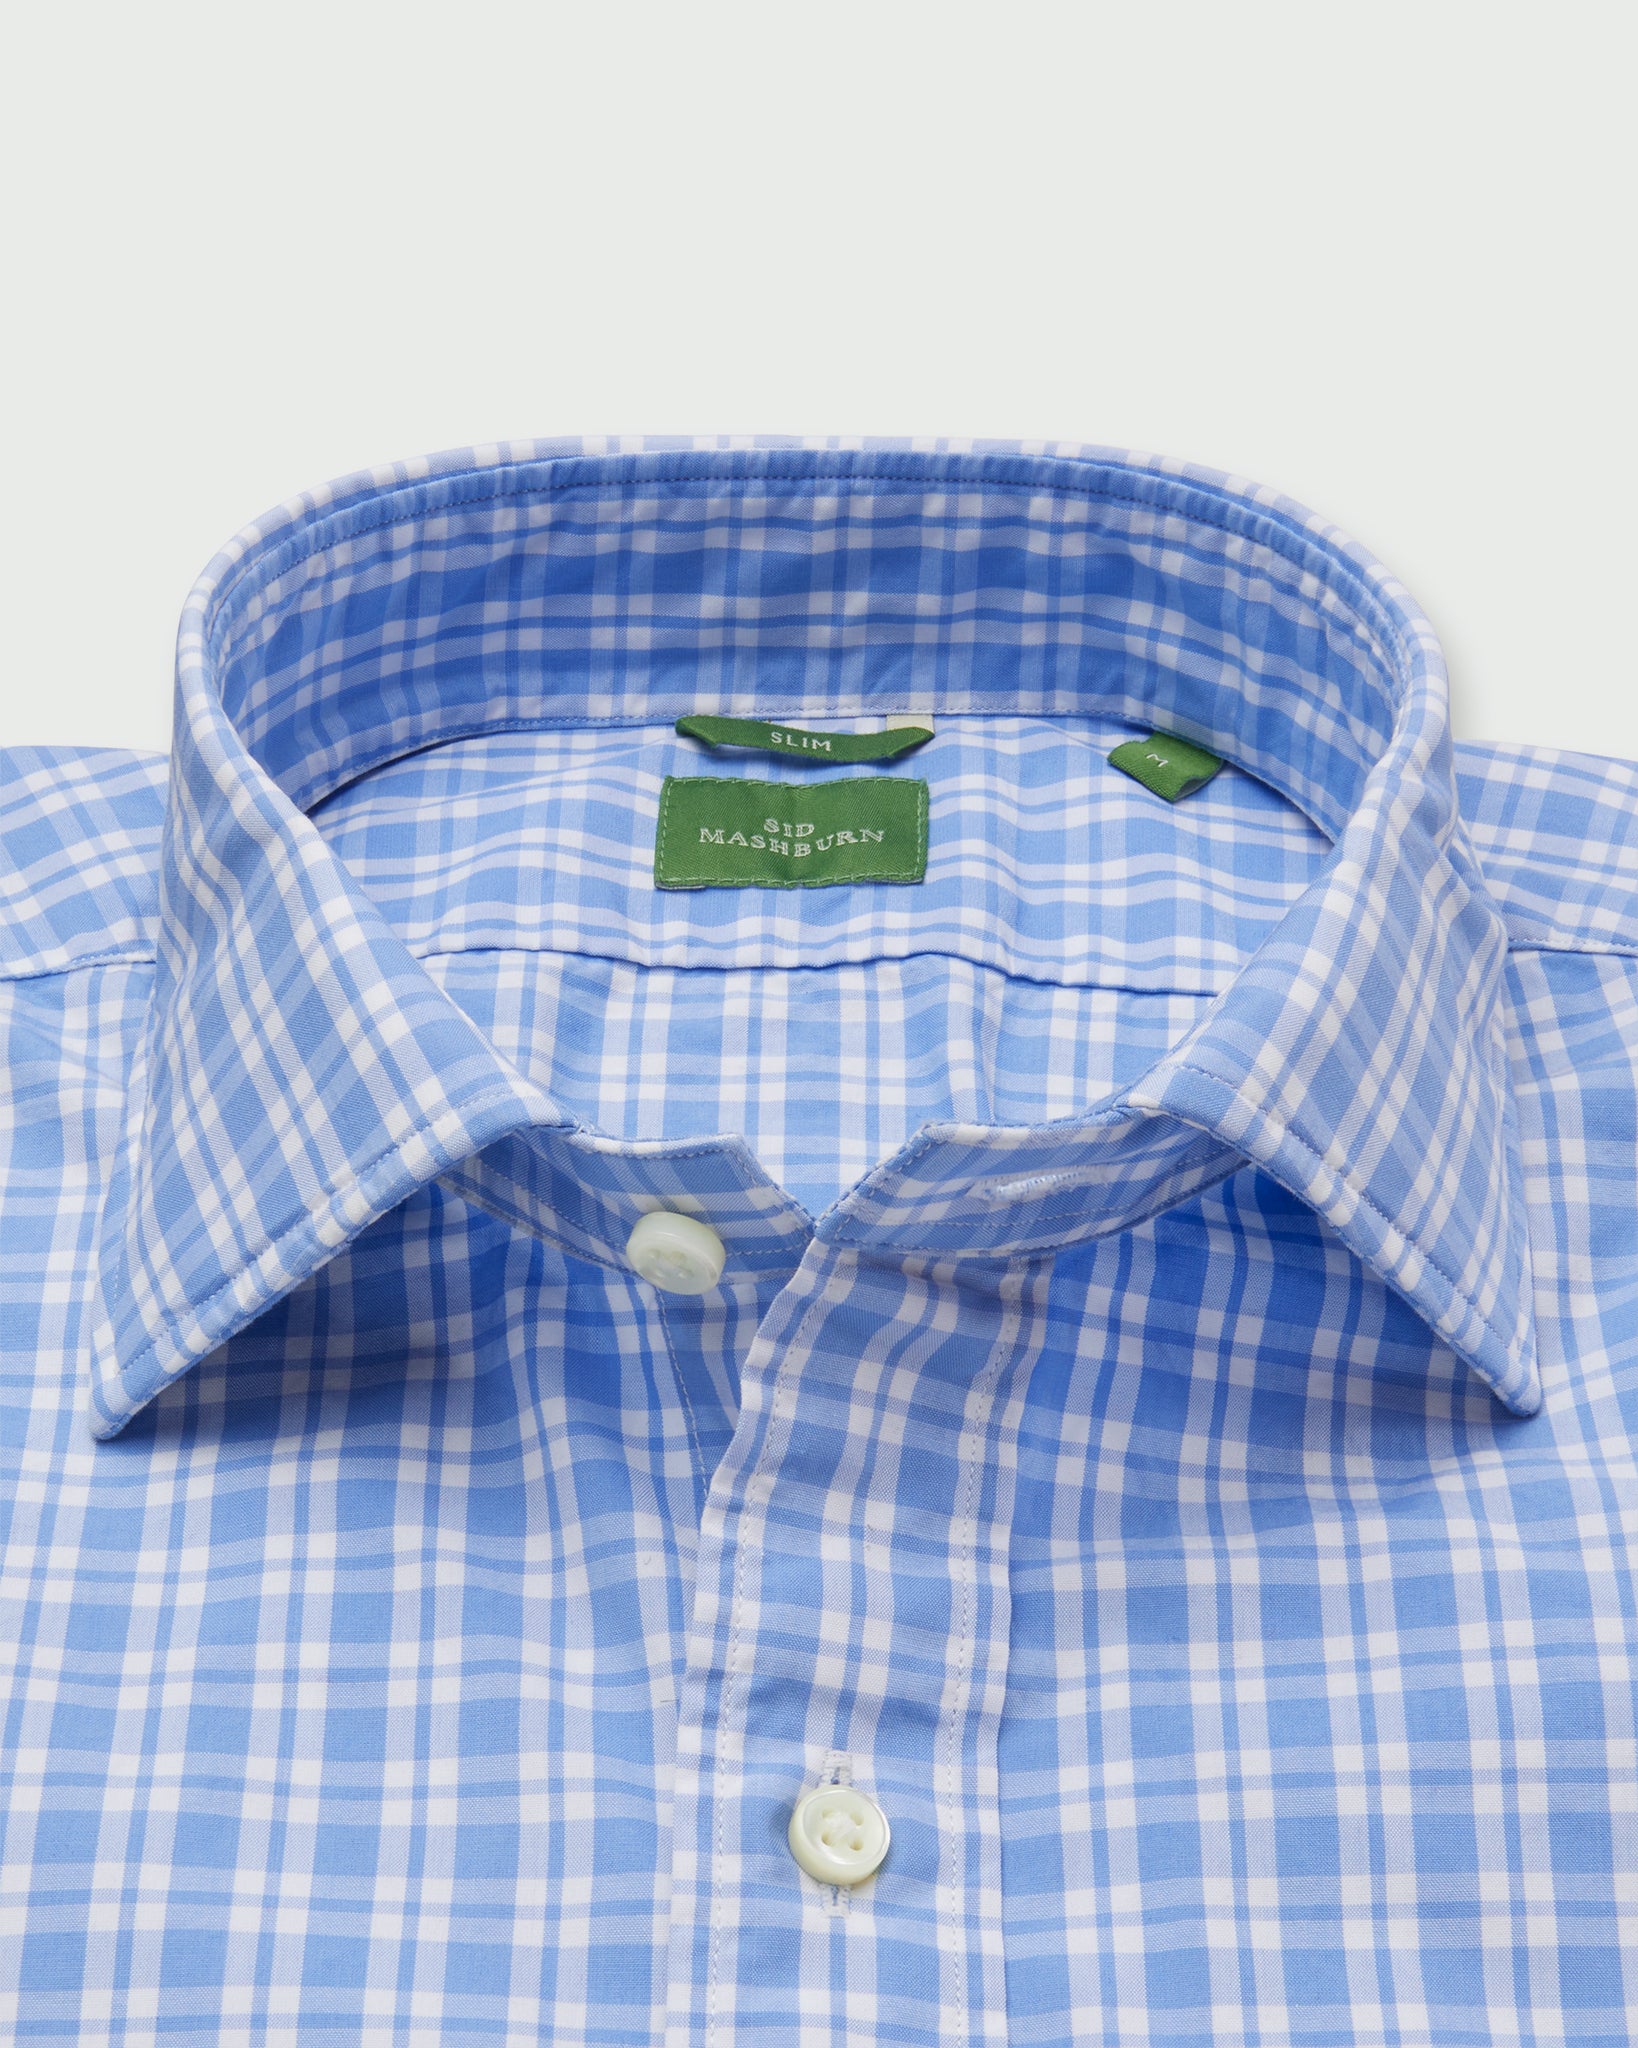 Slim-Fit Spread Collar Sport Shirt in Blue/White Check Poplin